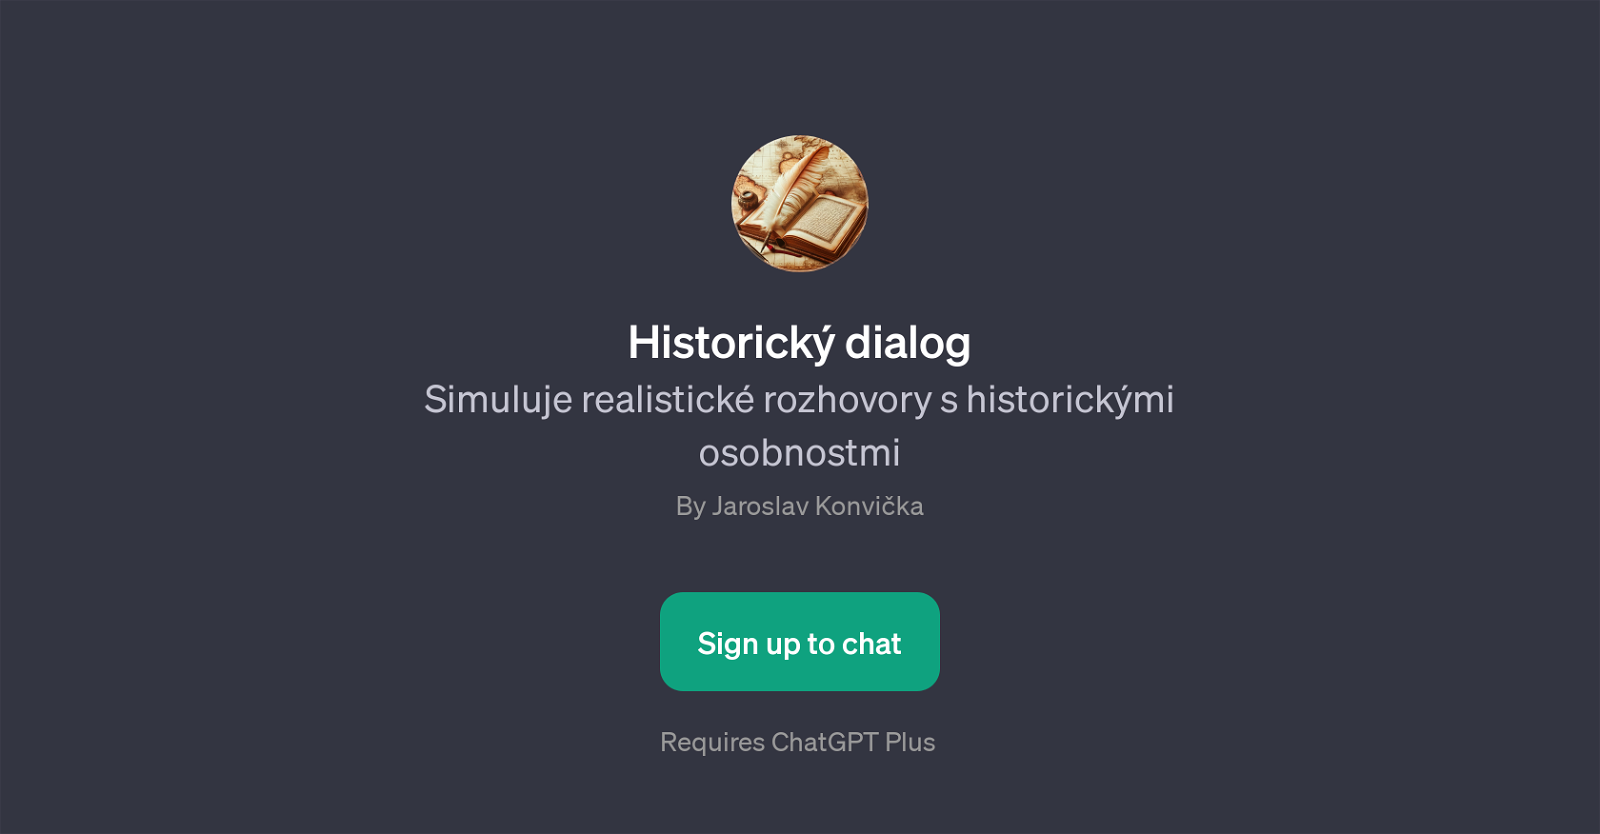 Historick dialog website